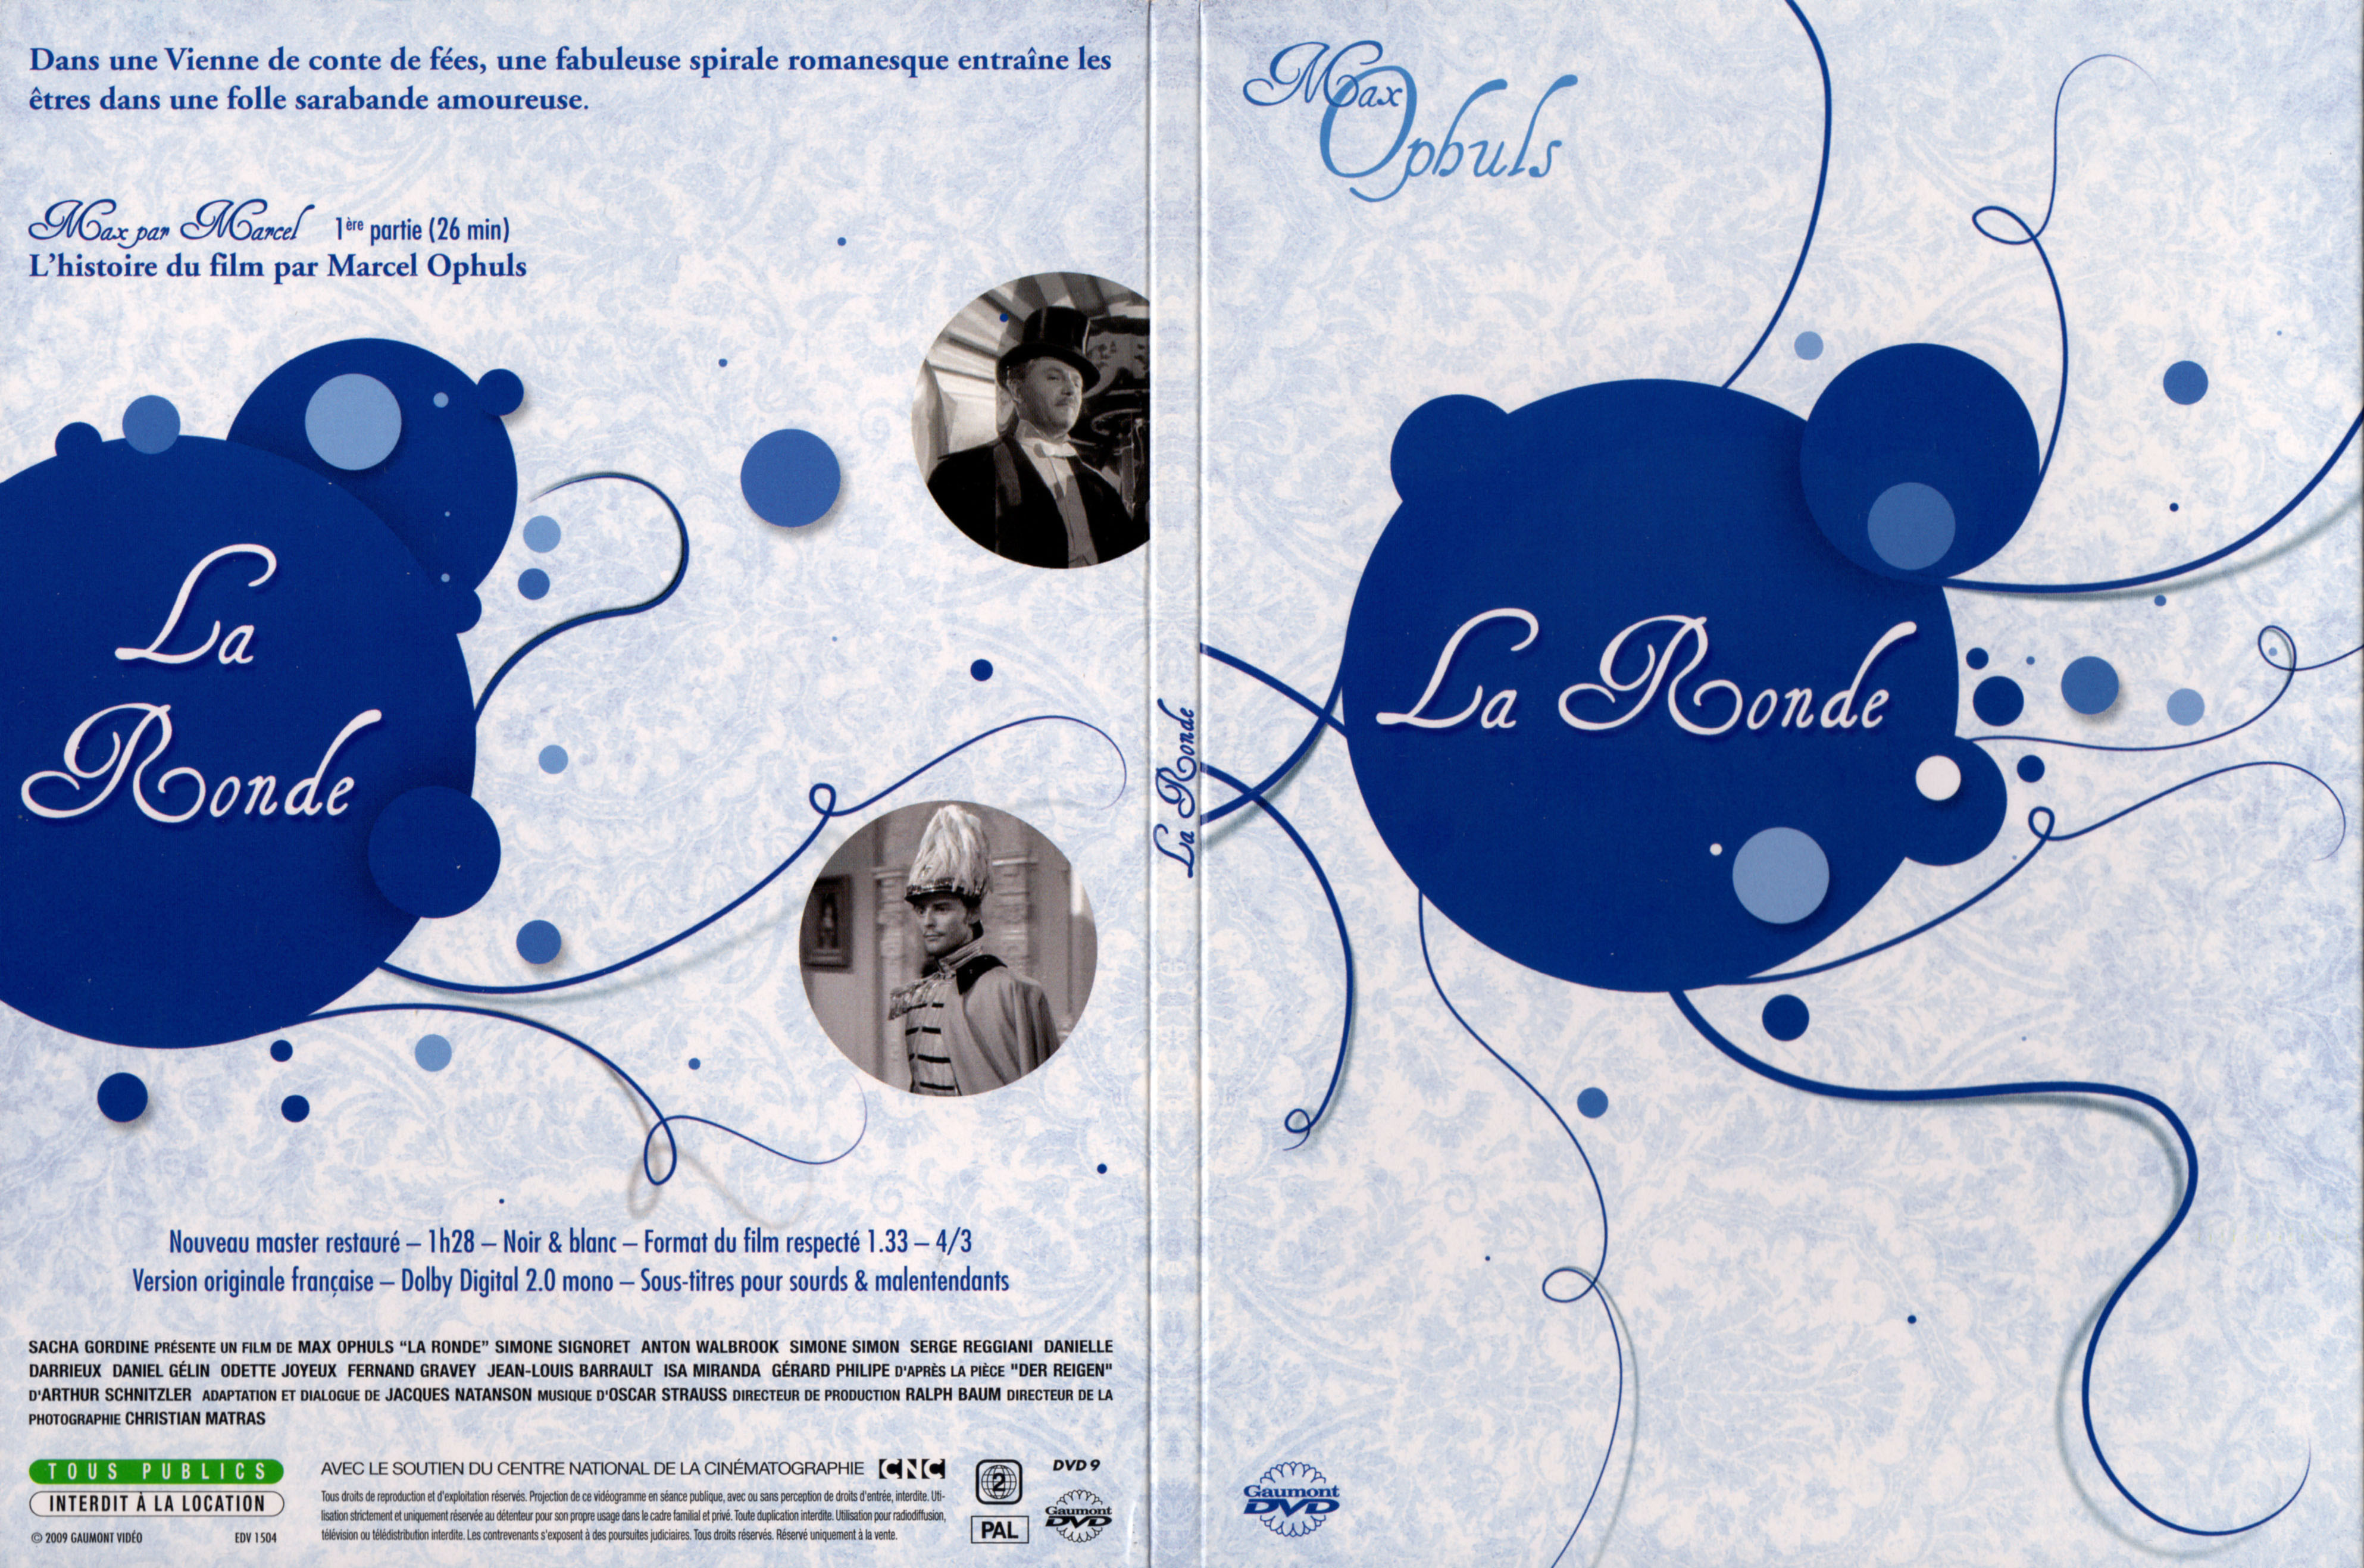 Jaquette DVD La ronde v2